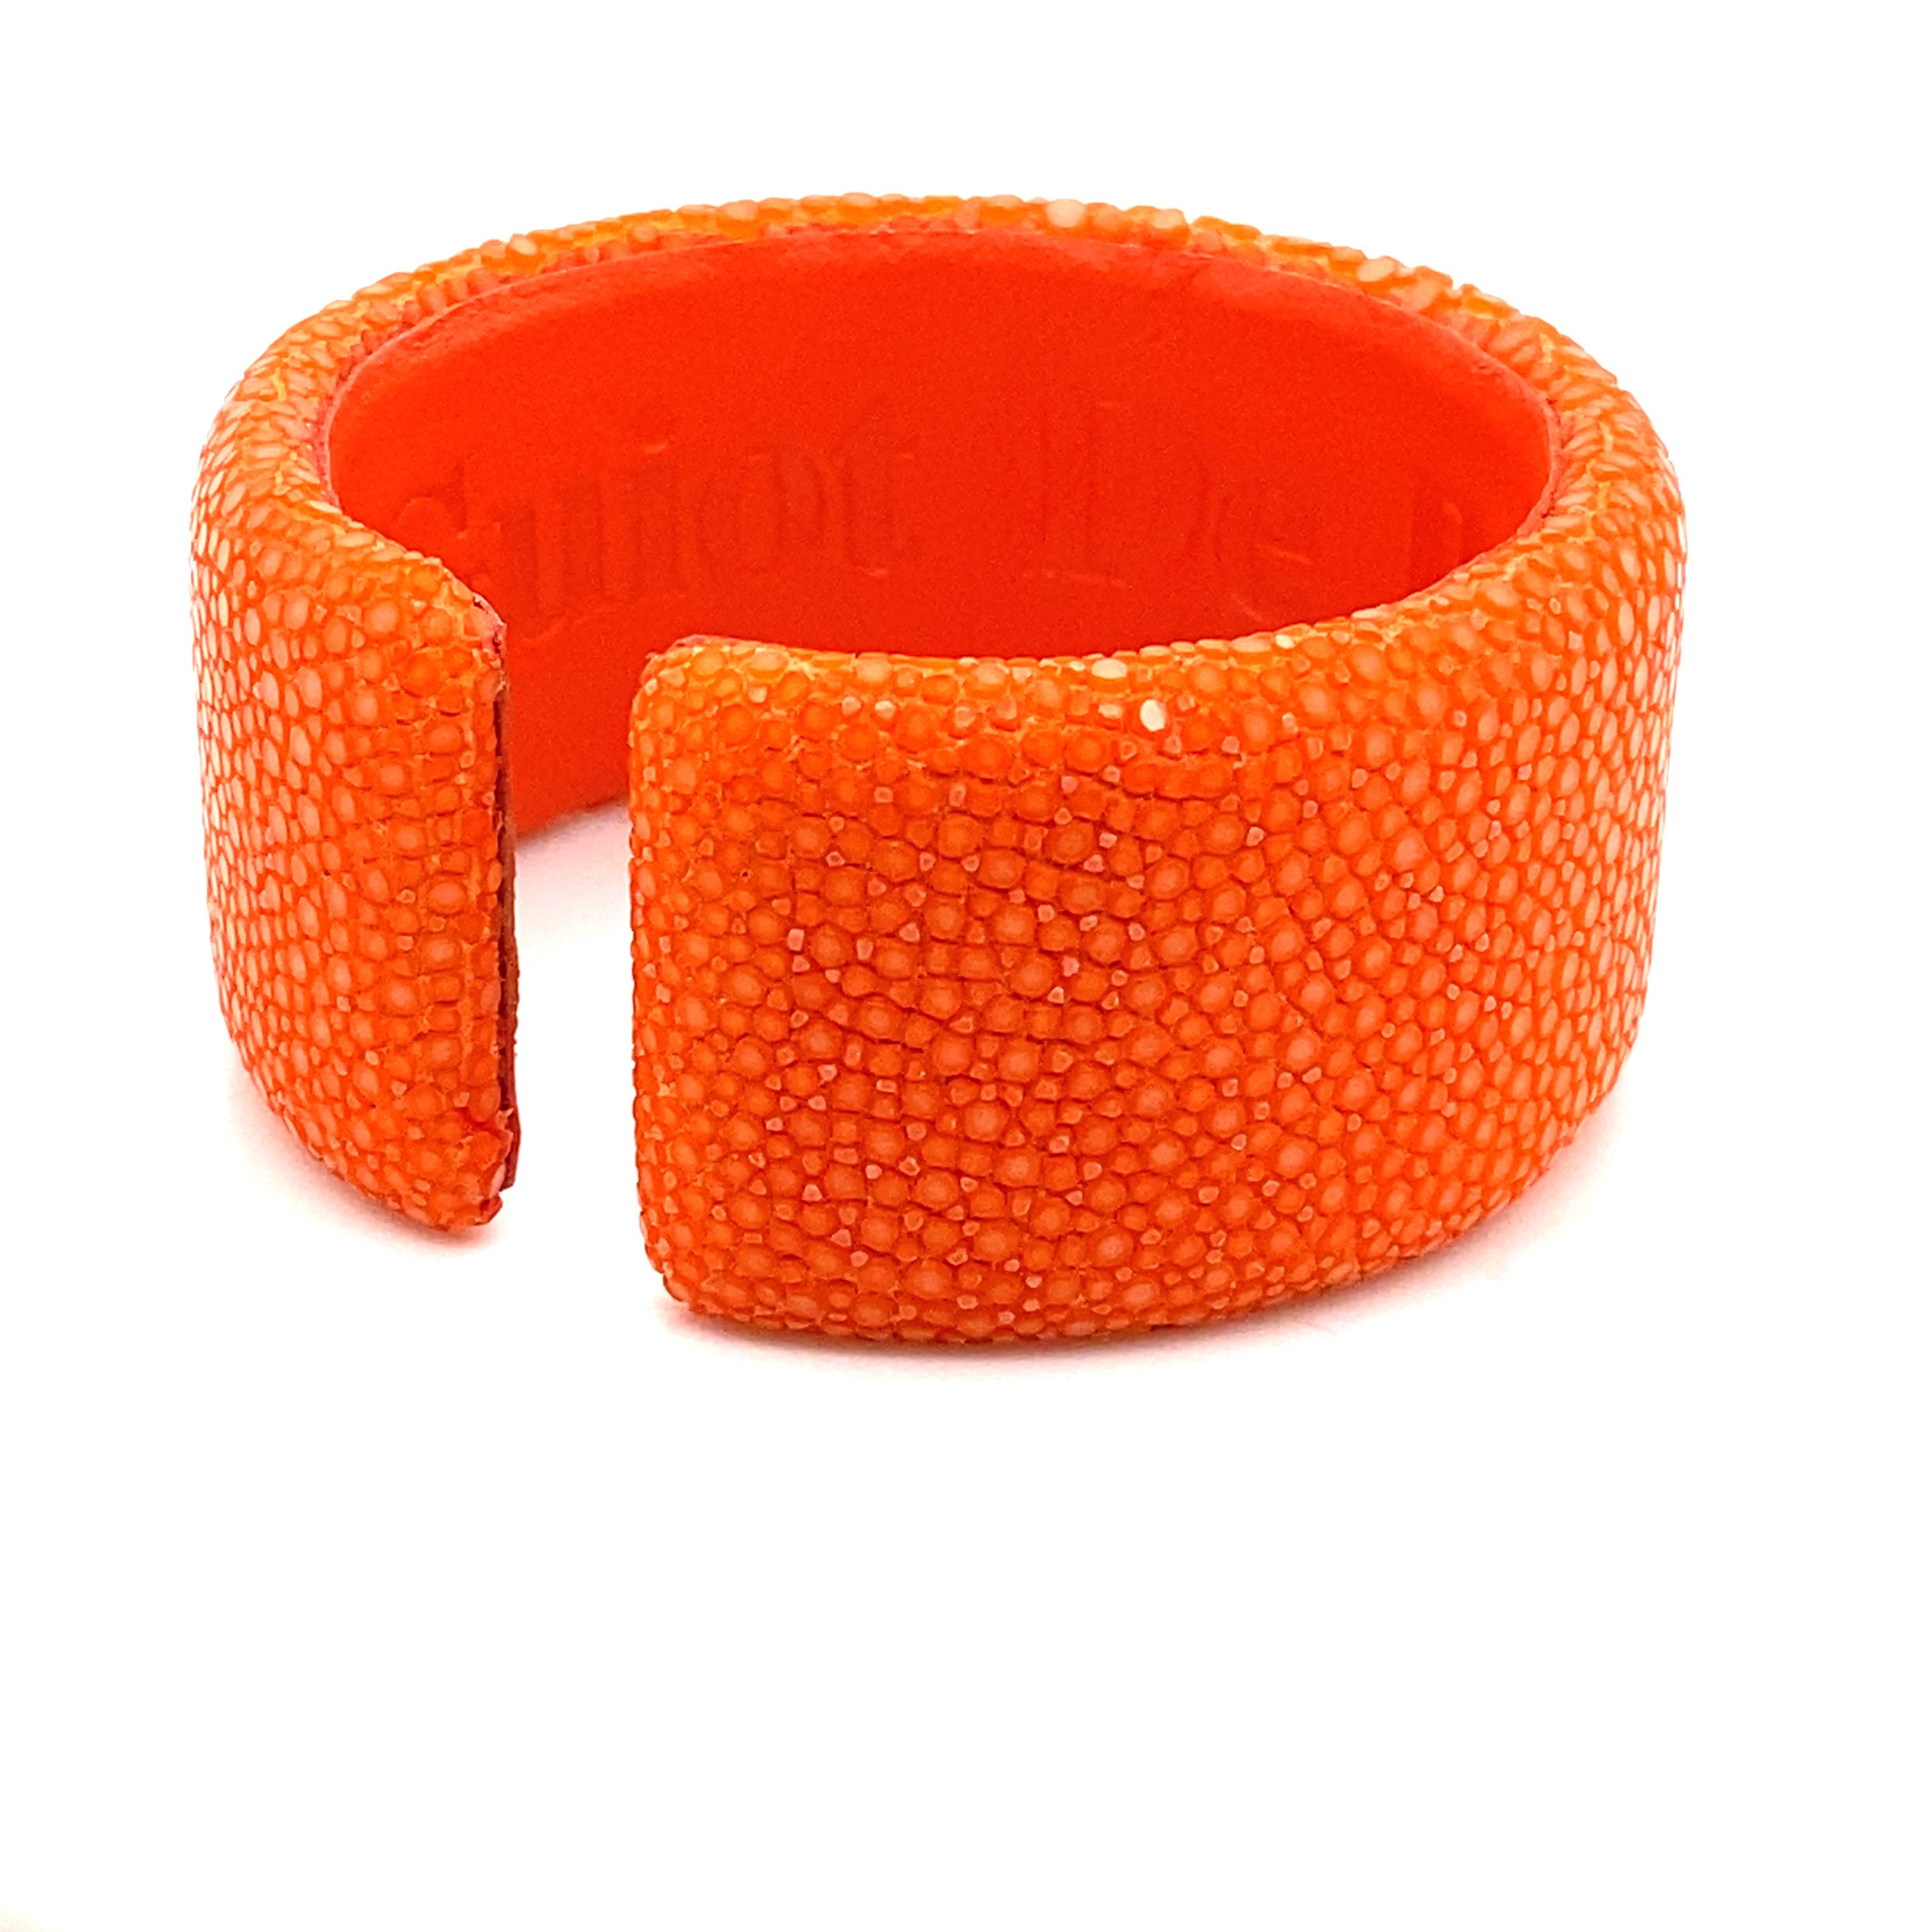 Orange Galuchat Cuff Bracelet In New Condition For Sale In Vannes, FR